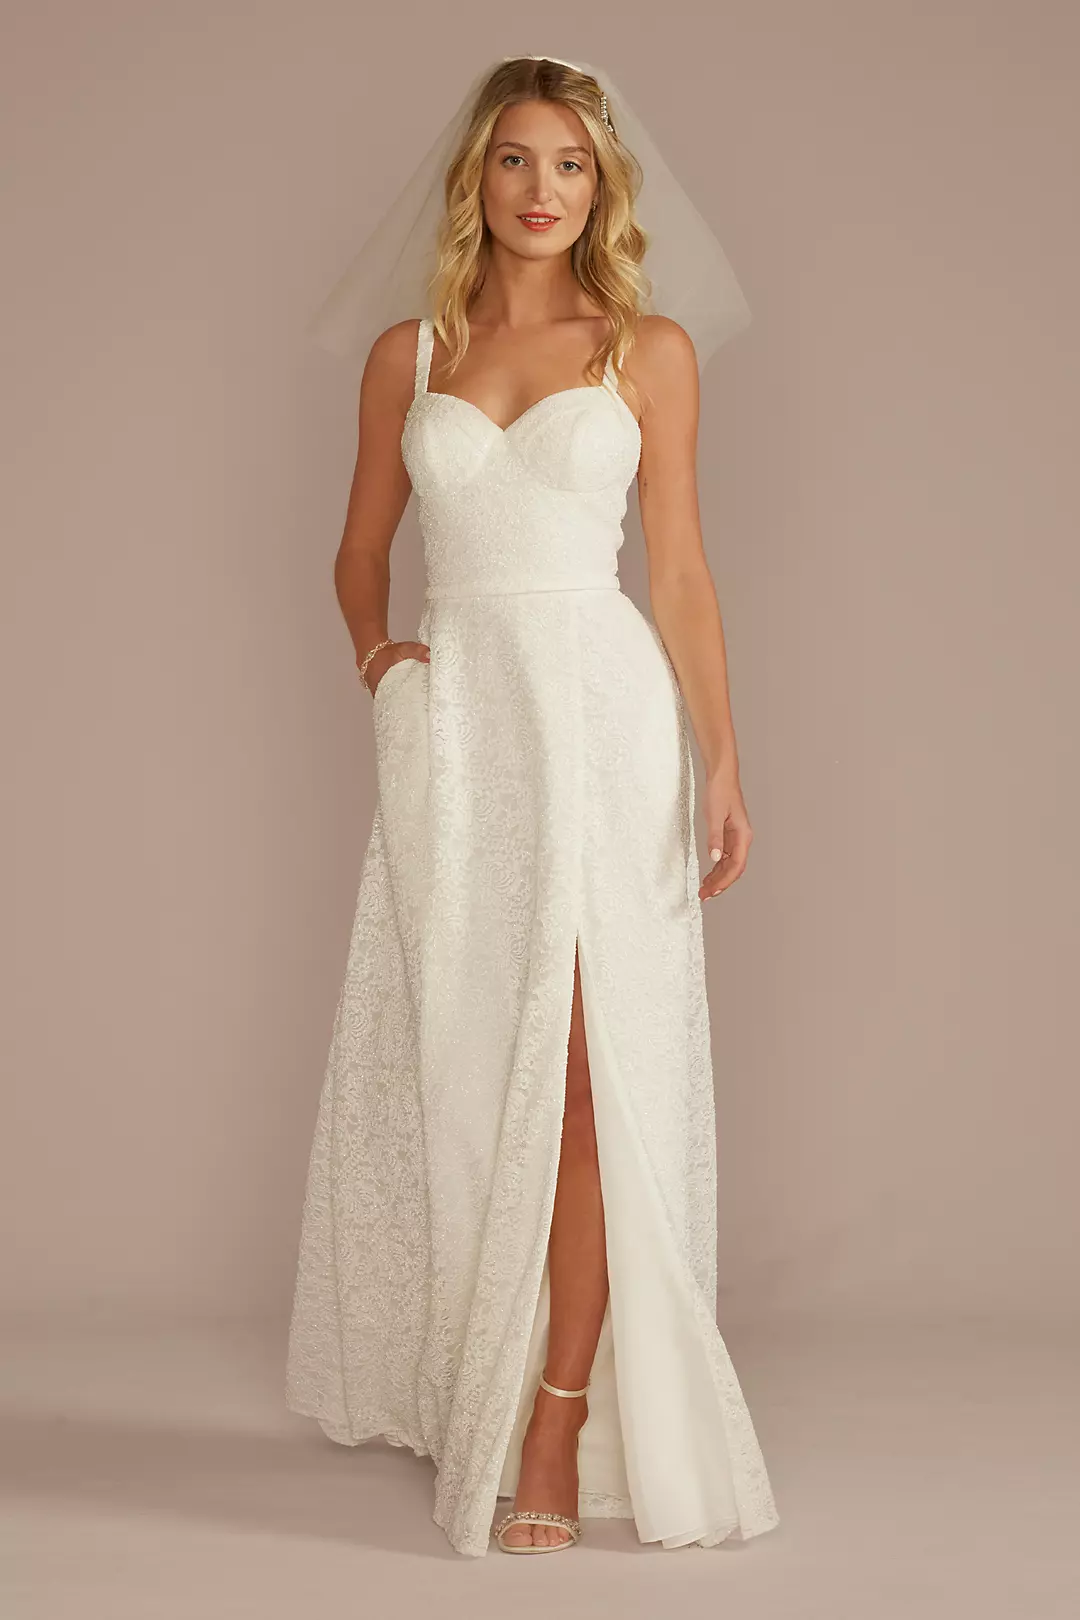 Sparkle Lace Corset Bodice A-Line Wedding Dress Image